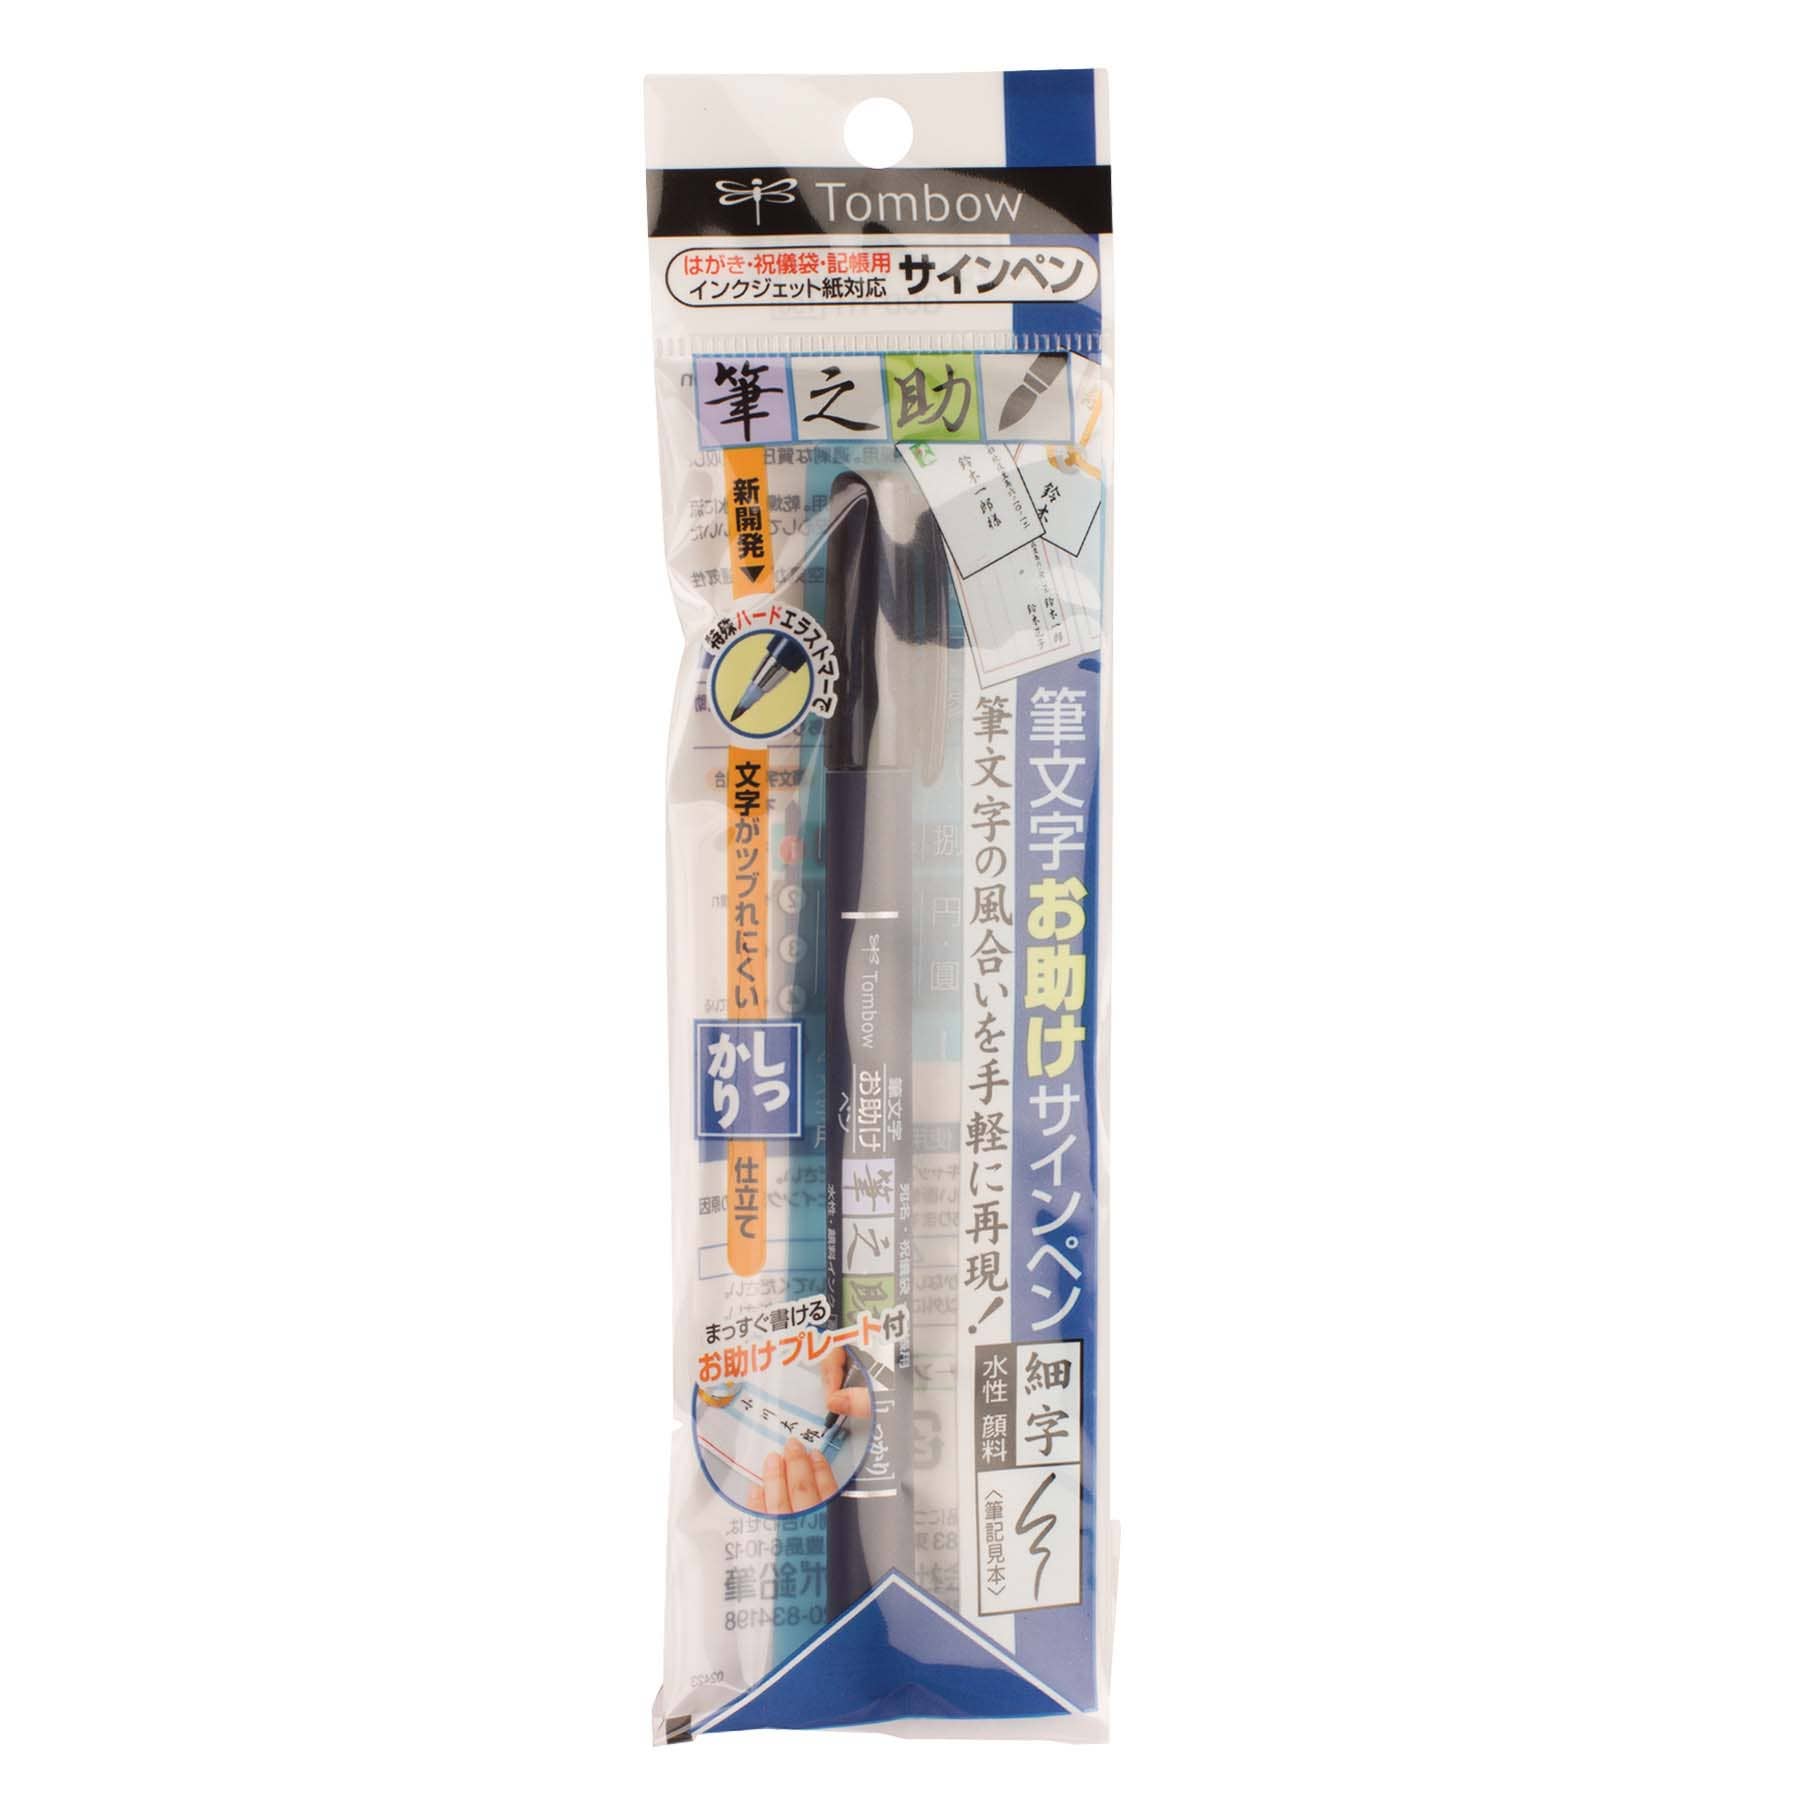 Tombow - Fudenosuke Brush Pen, Hard Tip, Black